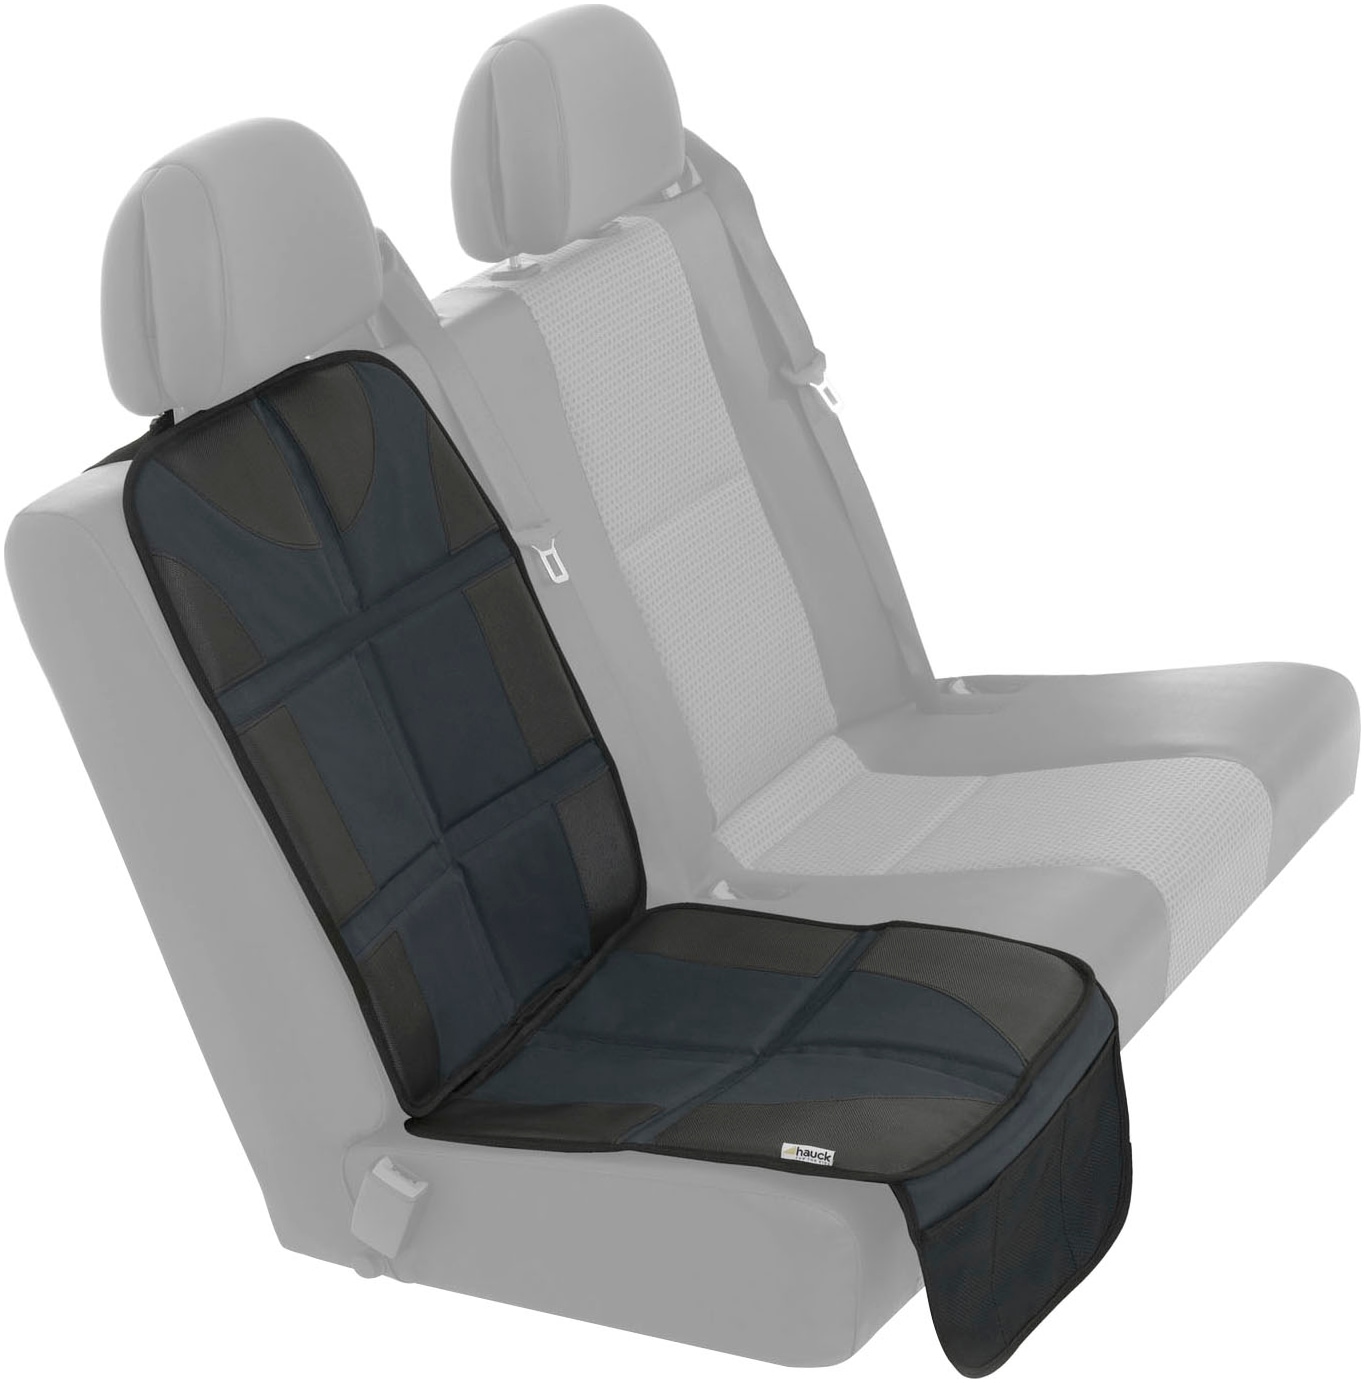 Kindersitzunterlage »Sit On Me Deluxe«, Universaler Sitzschoner für PKW-Sitze